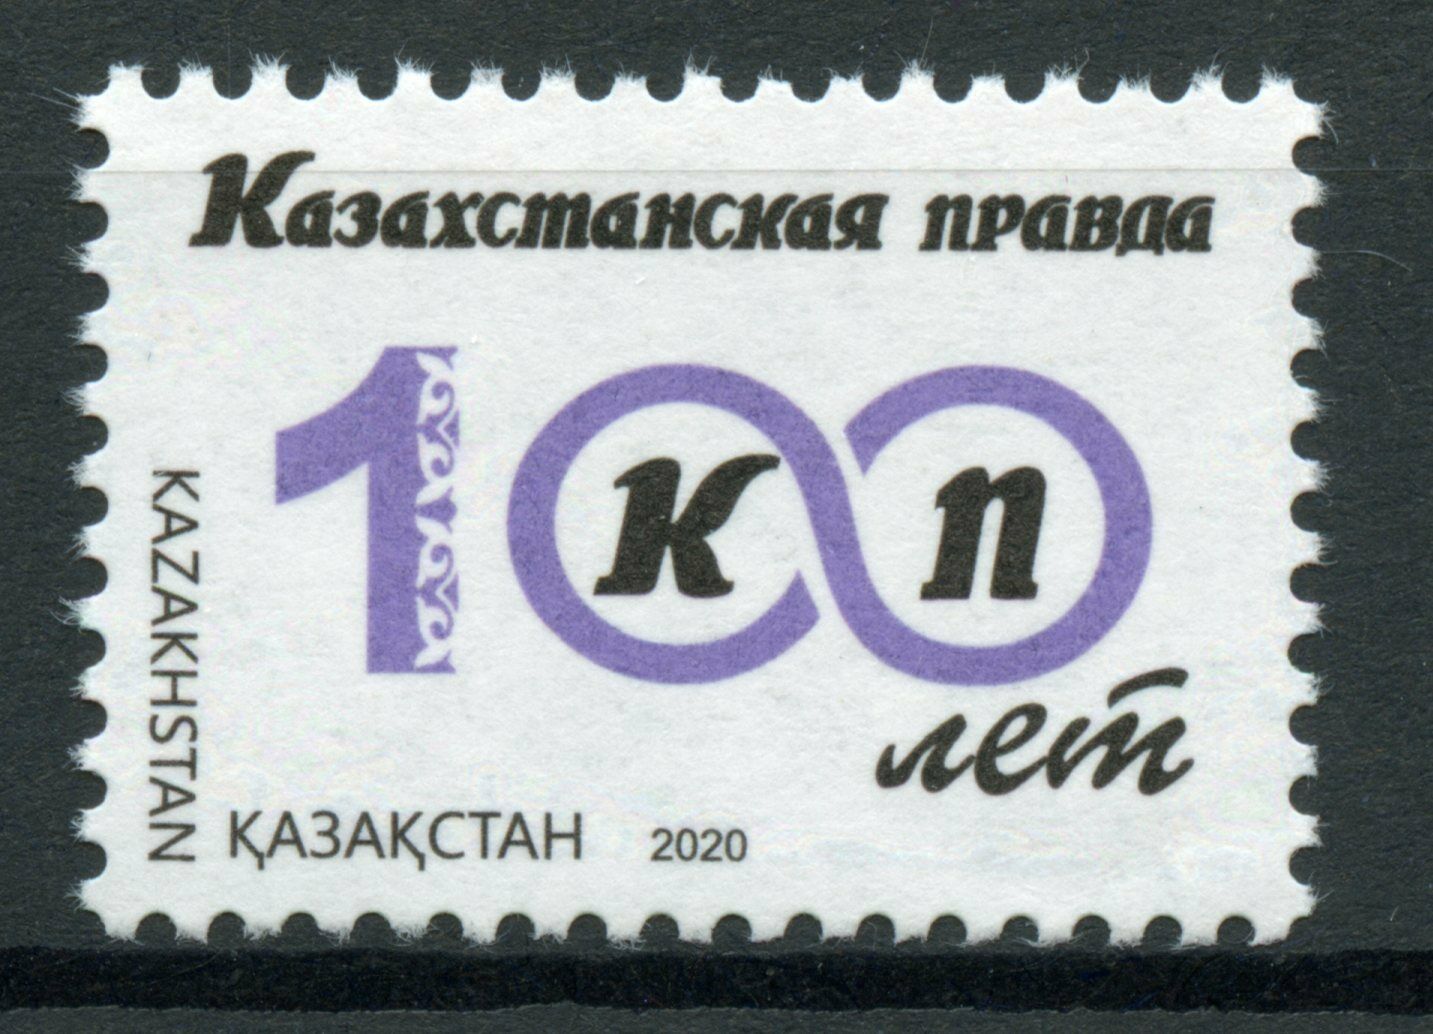 Kazakhstan Newspapers Stamps 2020 MNH Kazakhstan Truth Pravda 100 Years 1v Set